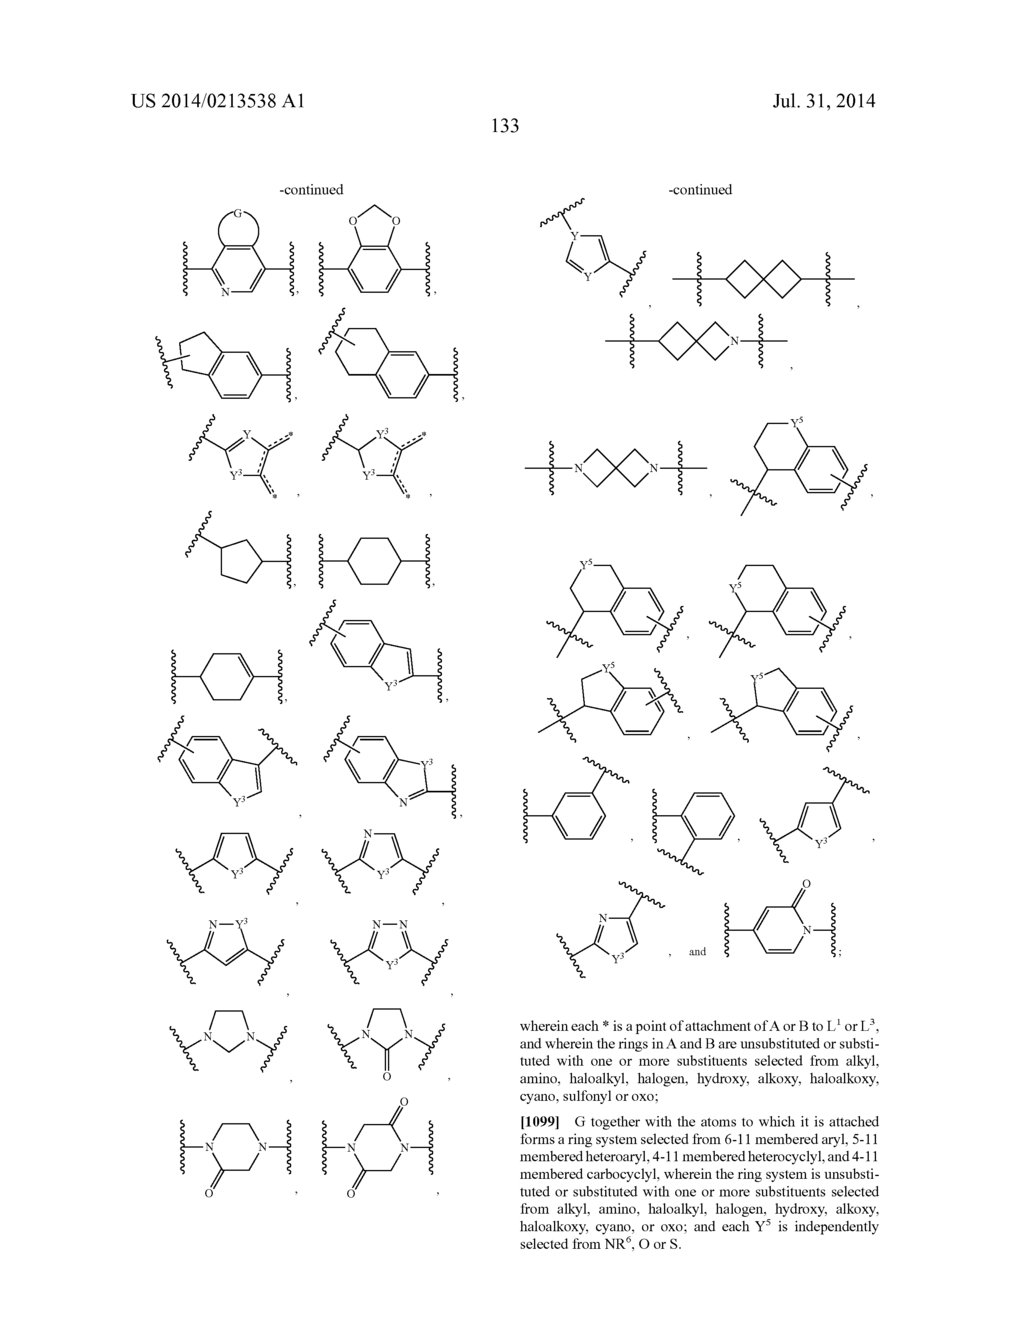 LYSOPHOSPHATIDIC ACID RECEPTOR ANTAGONISTS - diagram, schematic, and image 134